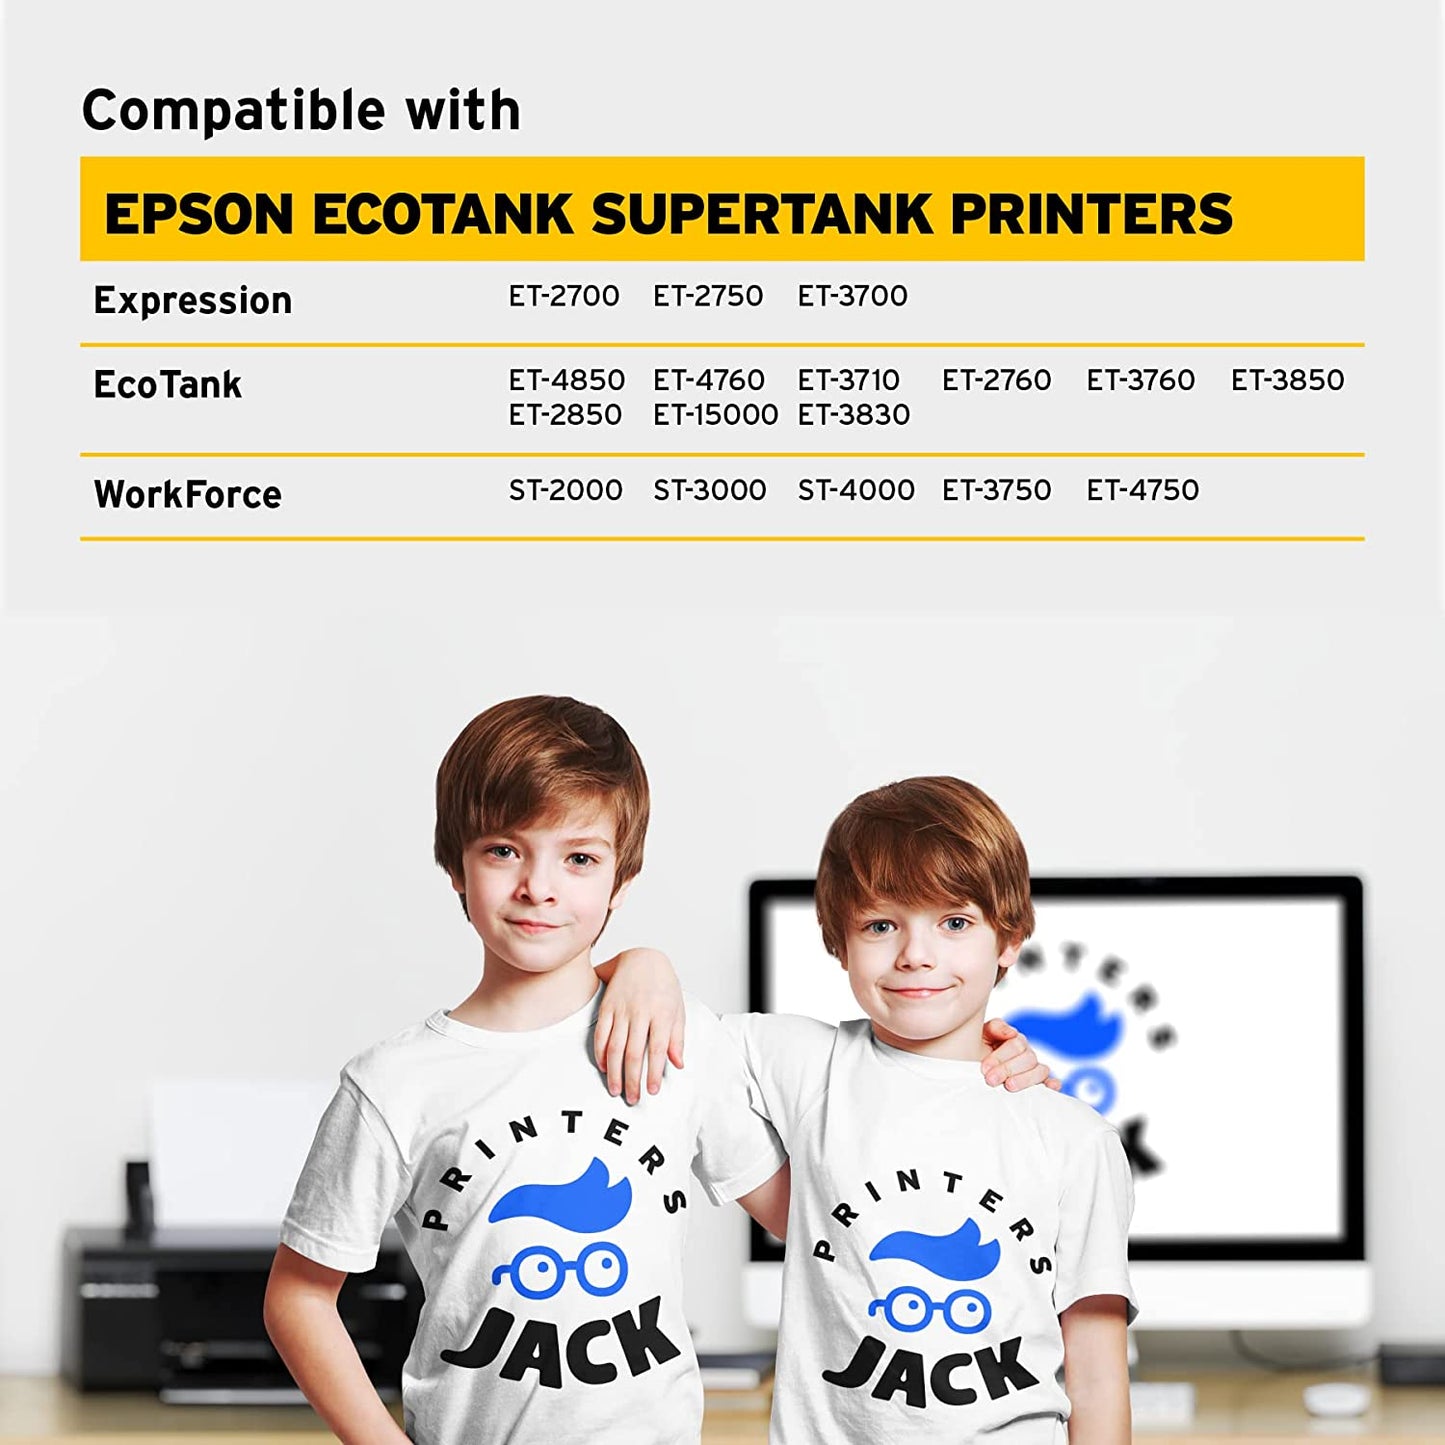 Multi-Color Auto-Refill Anti-UV Printers Jack Sublimation Ink Refill for Epson EcoTank Supertank Printers